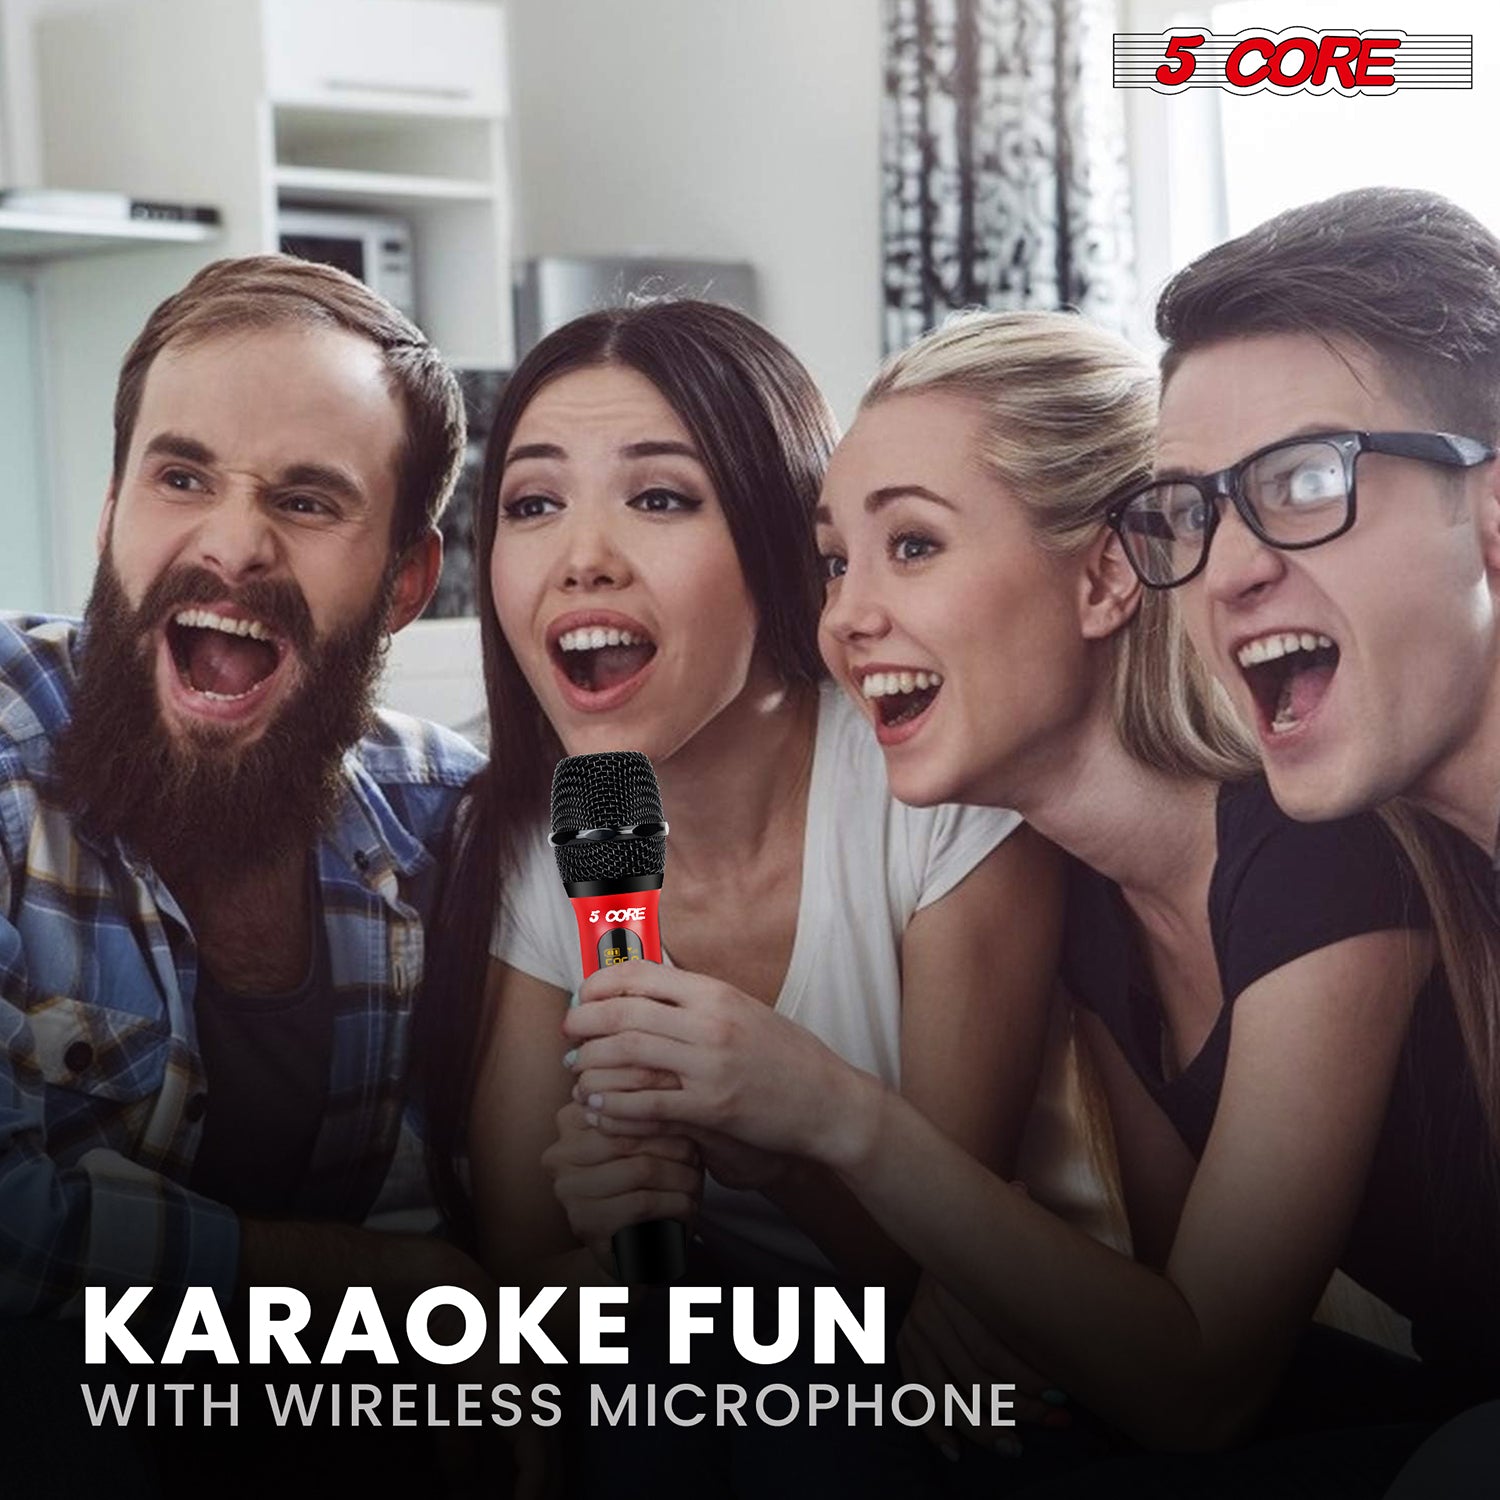 5 Core UHF Wireless Microphone • 210FT Max Range Microfonos Inalambricos • Cardioid Karaoke Dynamic Mic Red Black/ Red Gray